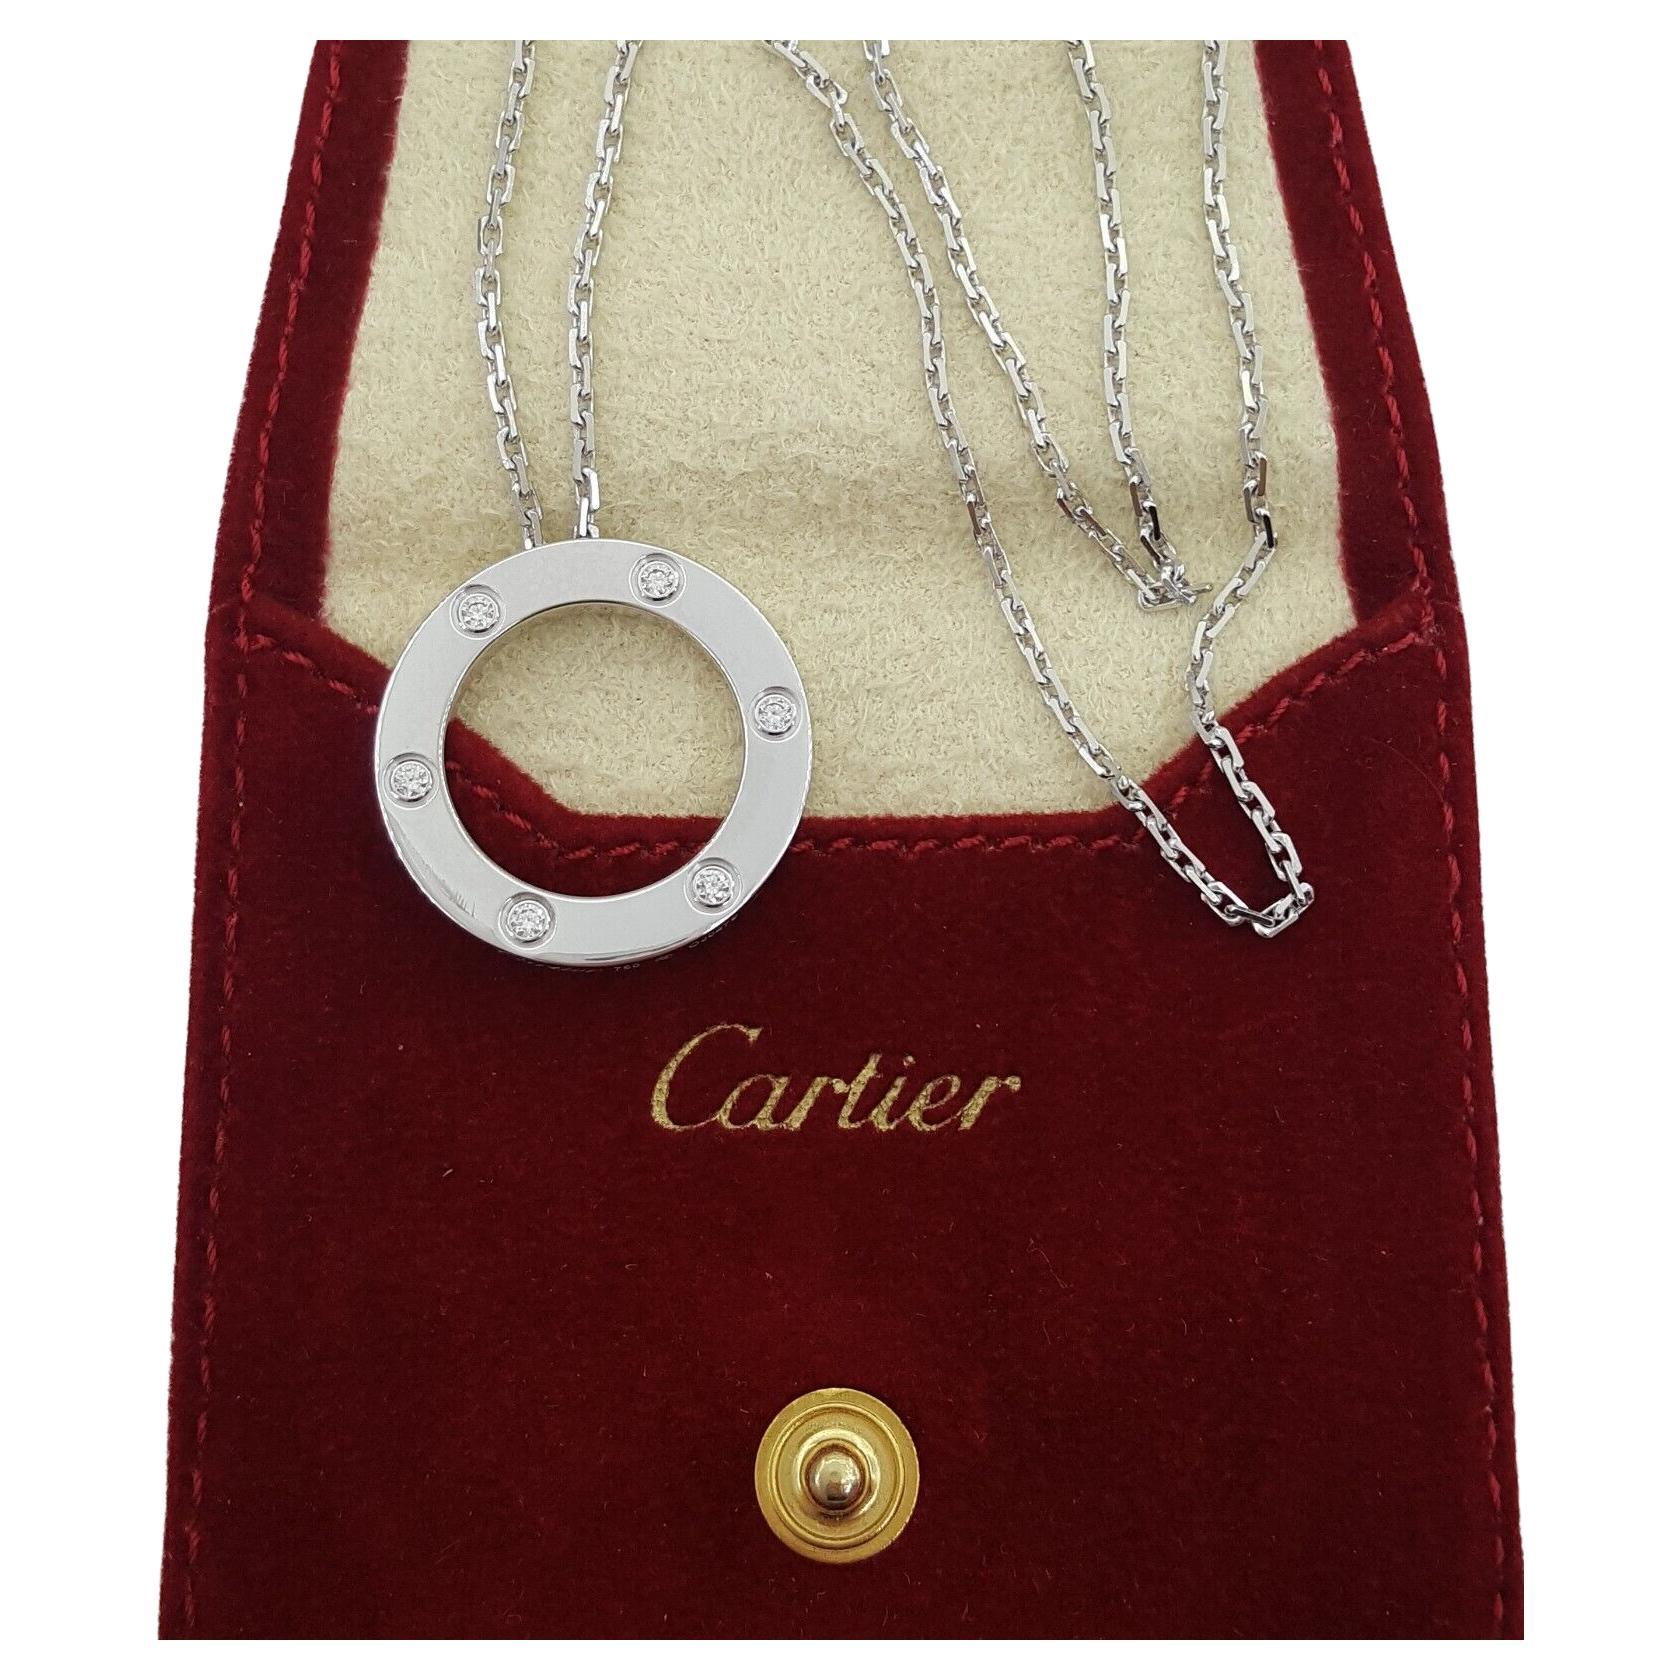 cartier patiala necklace price